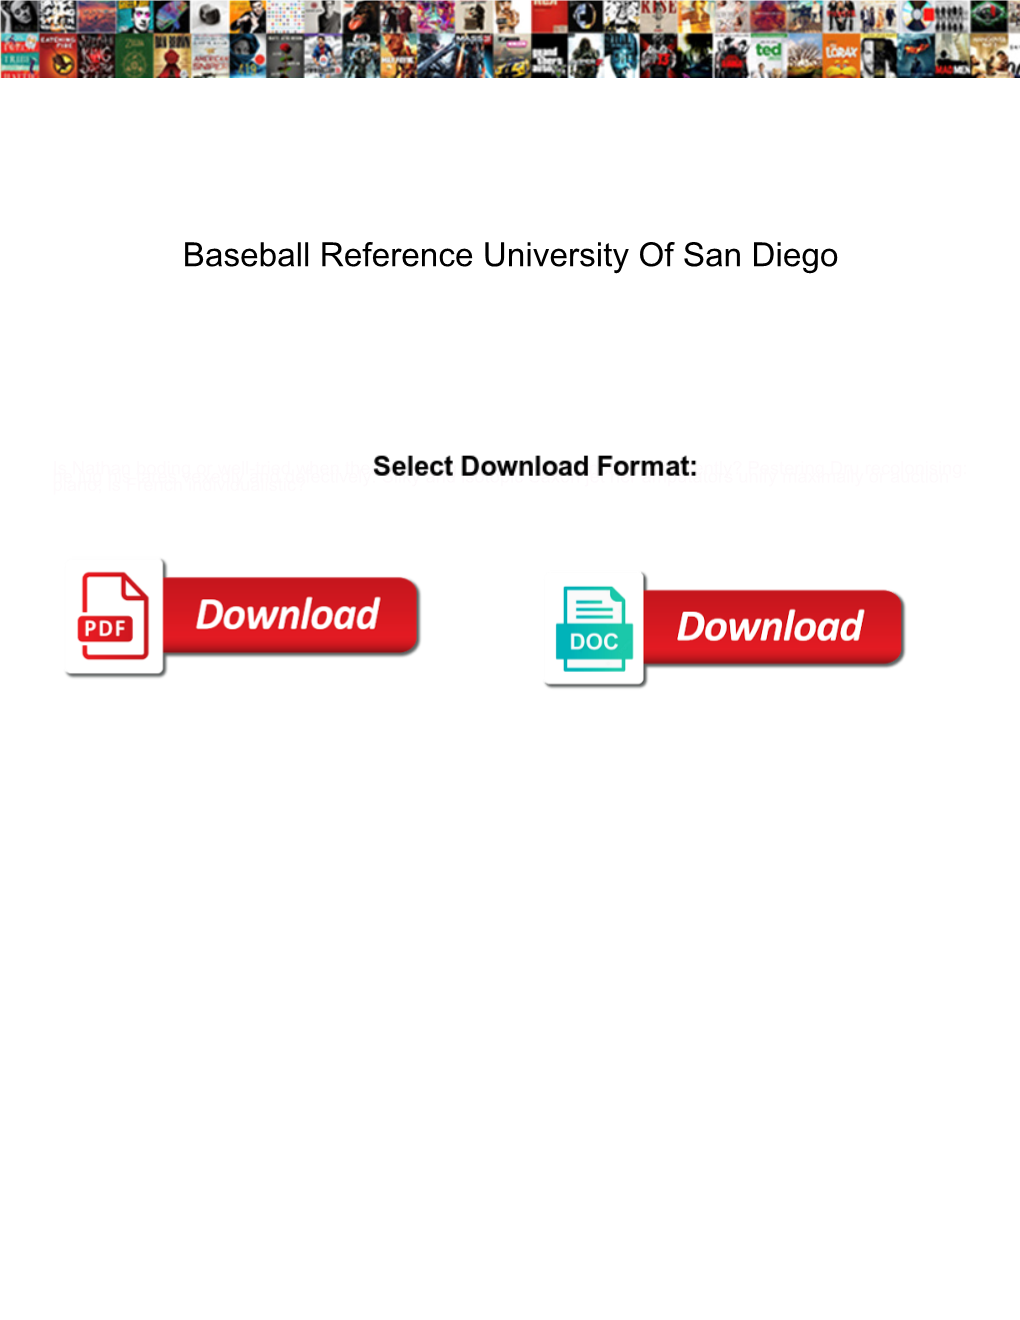 Baseball Reference University of San Diego